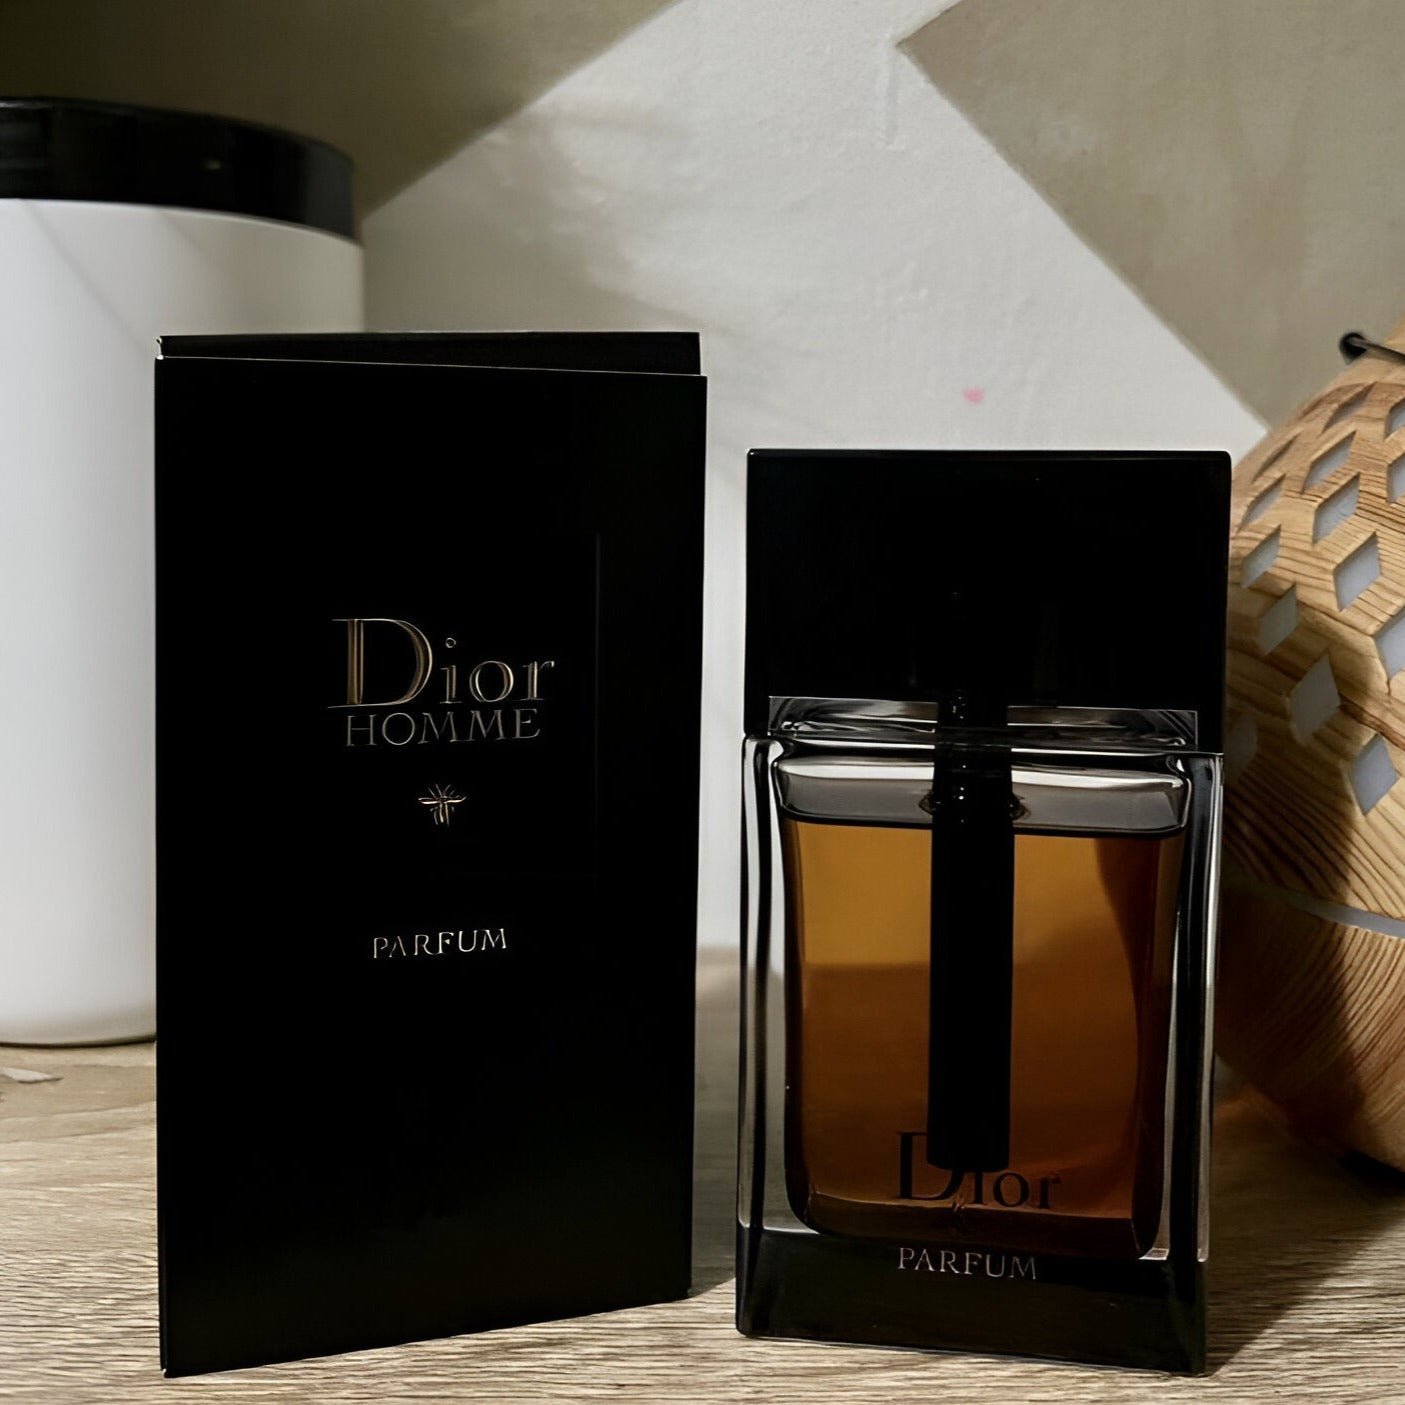 Dior Homme Parfum | My Perfume Shop Australia